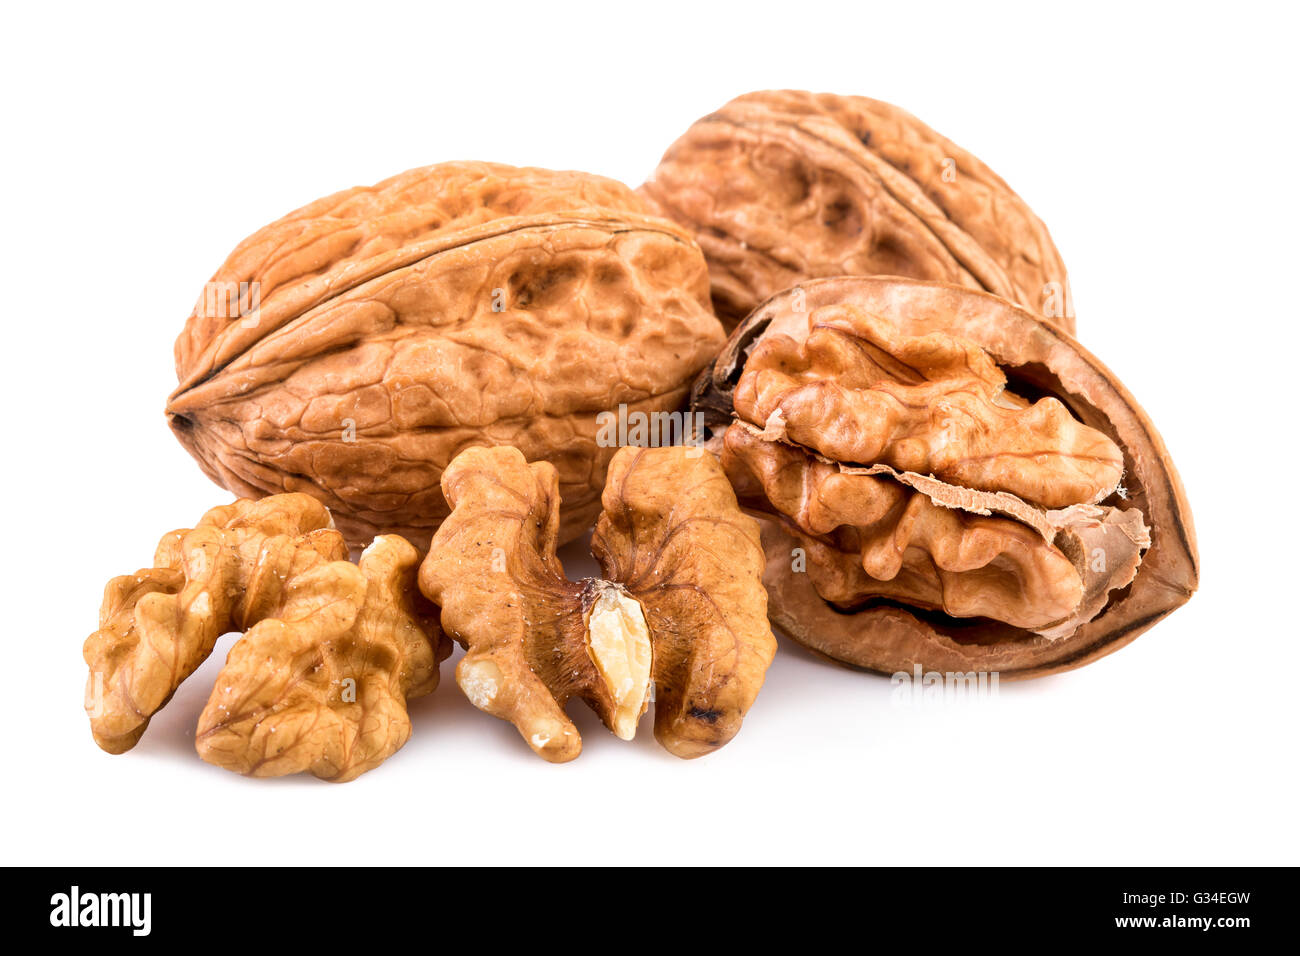 Walnuts and shelled walnuts on white background. Closeup. Stock Photo